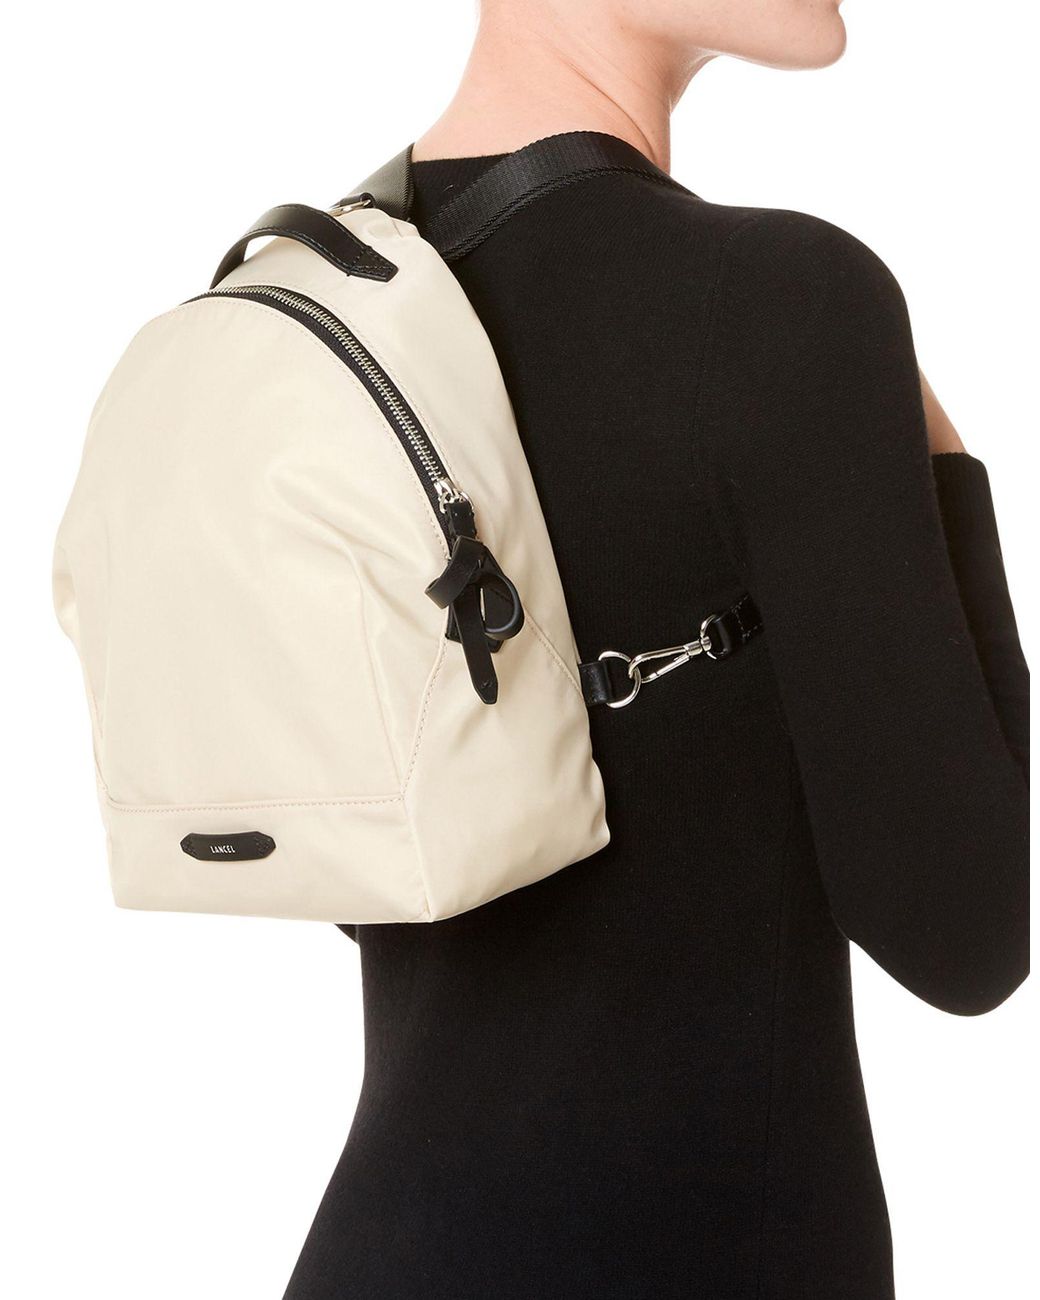 Lancel Backpacks & Bum Bags in Natural | Lyst Australia